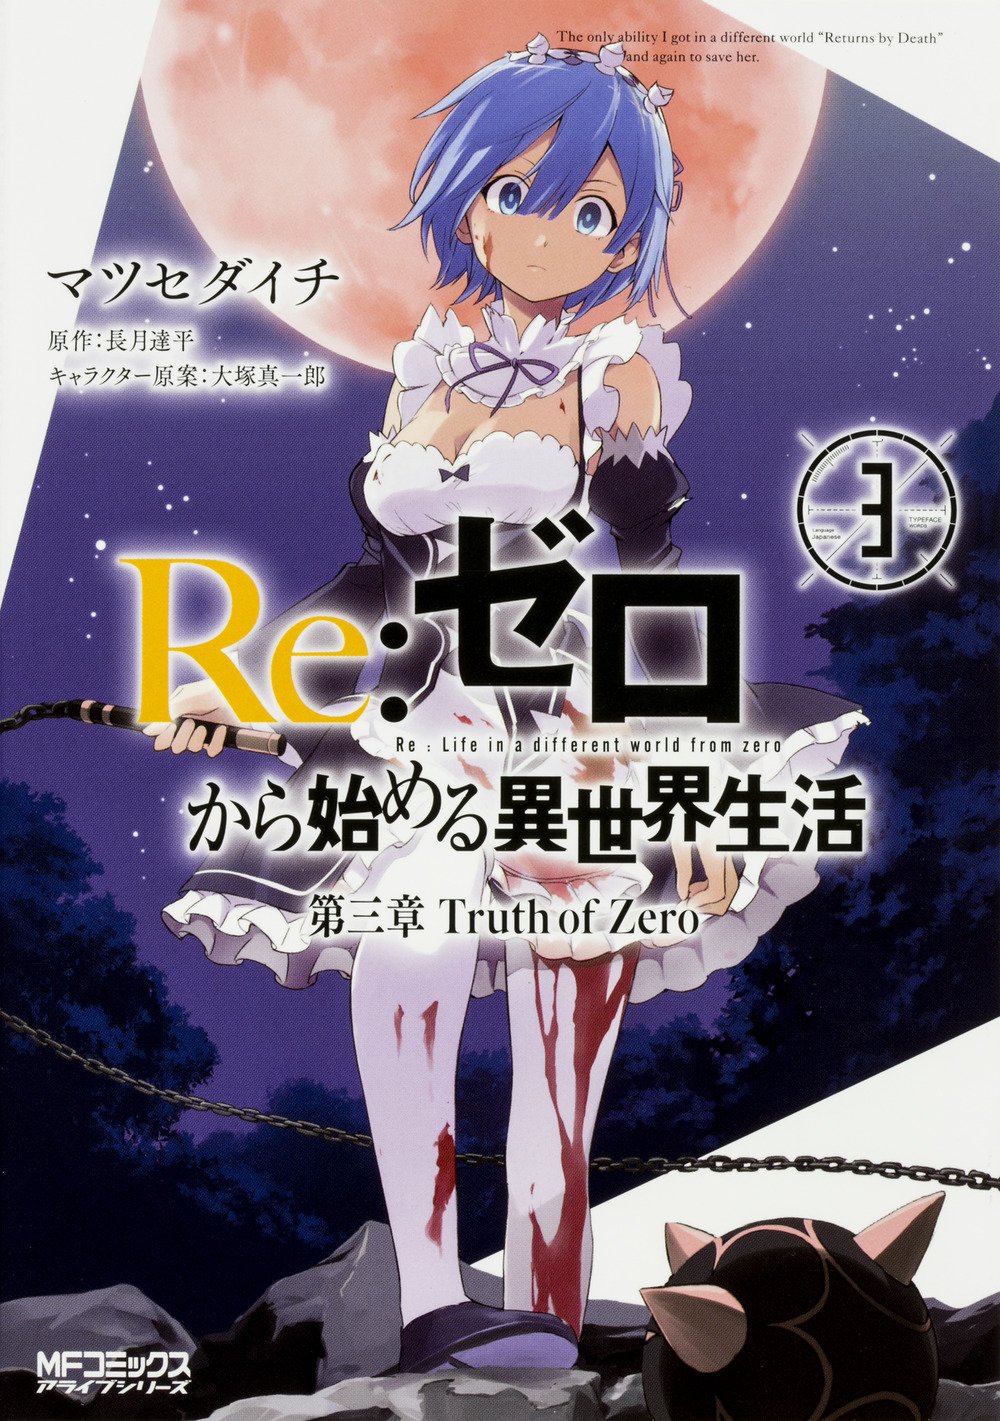 Re Zero List Of Volumes Animevice Wiki Fandom